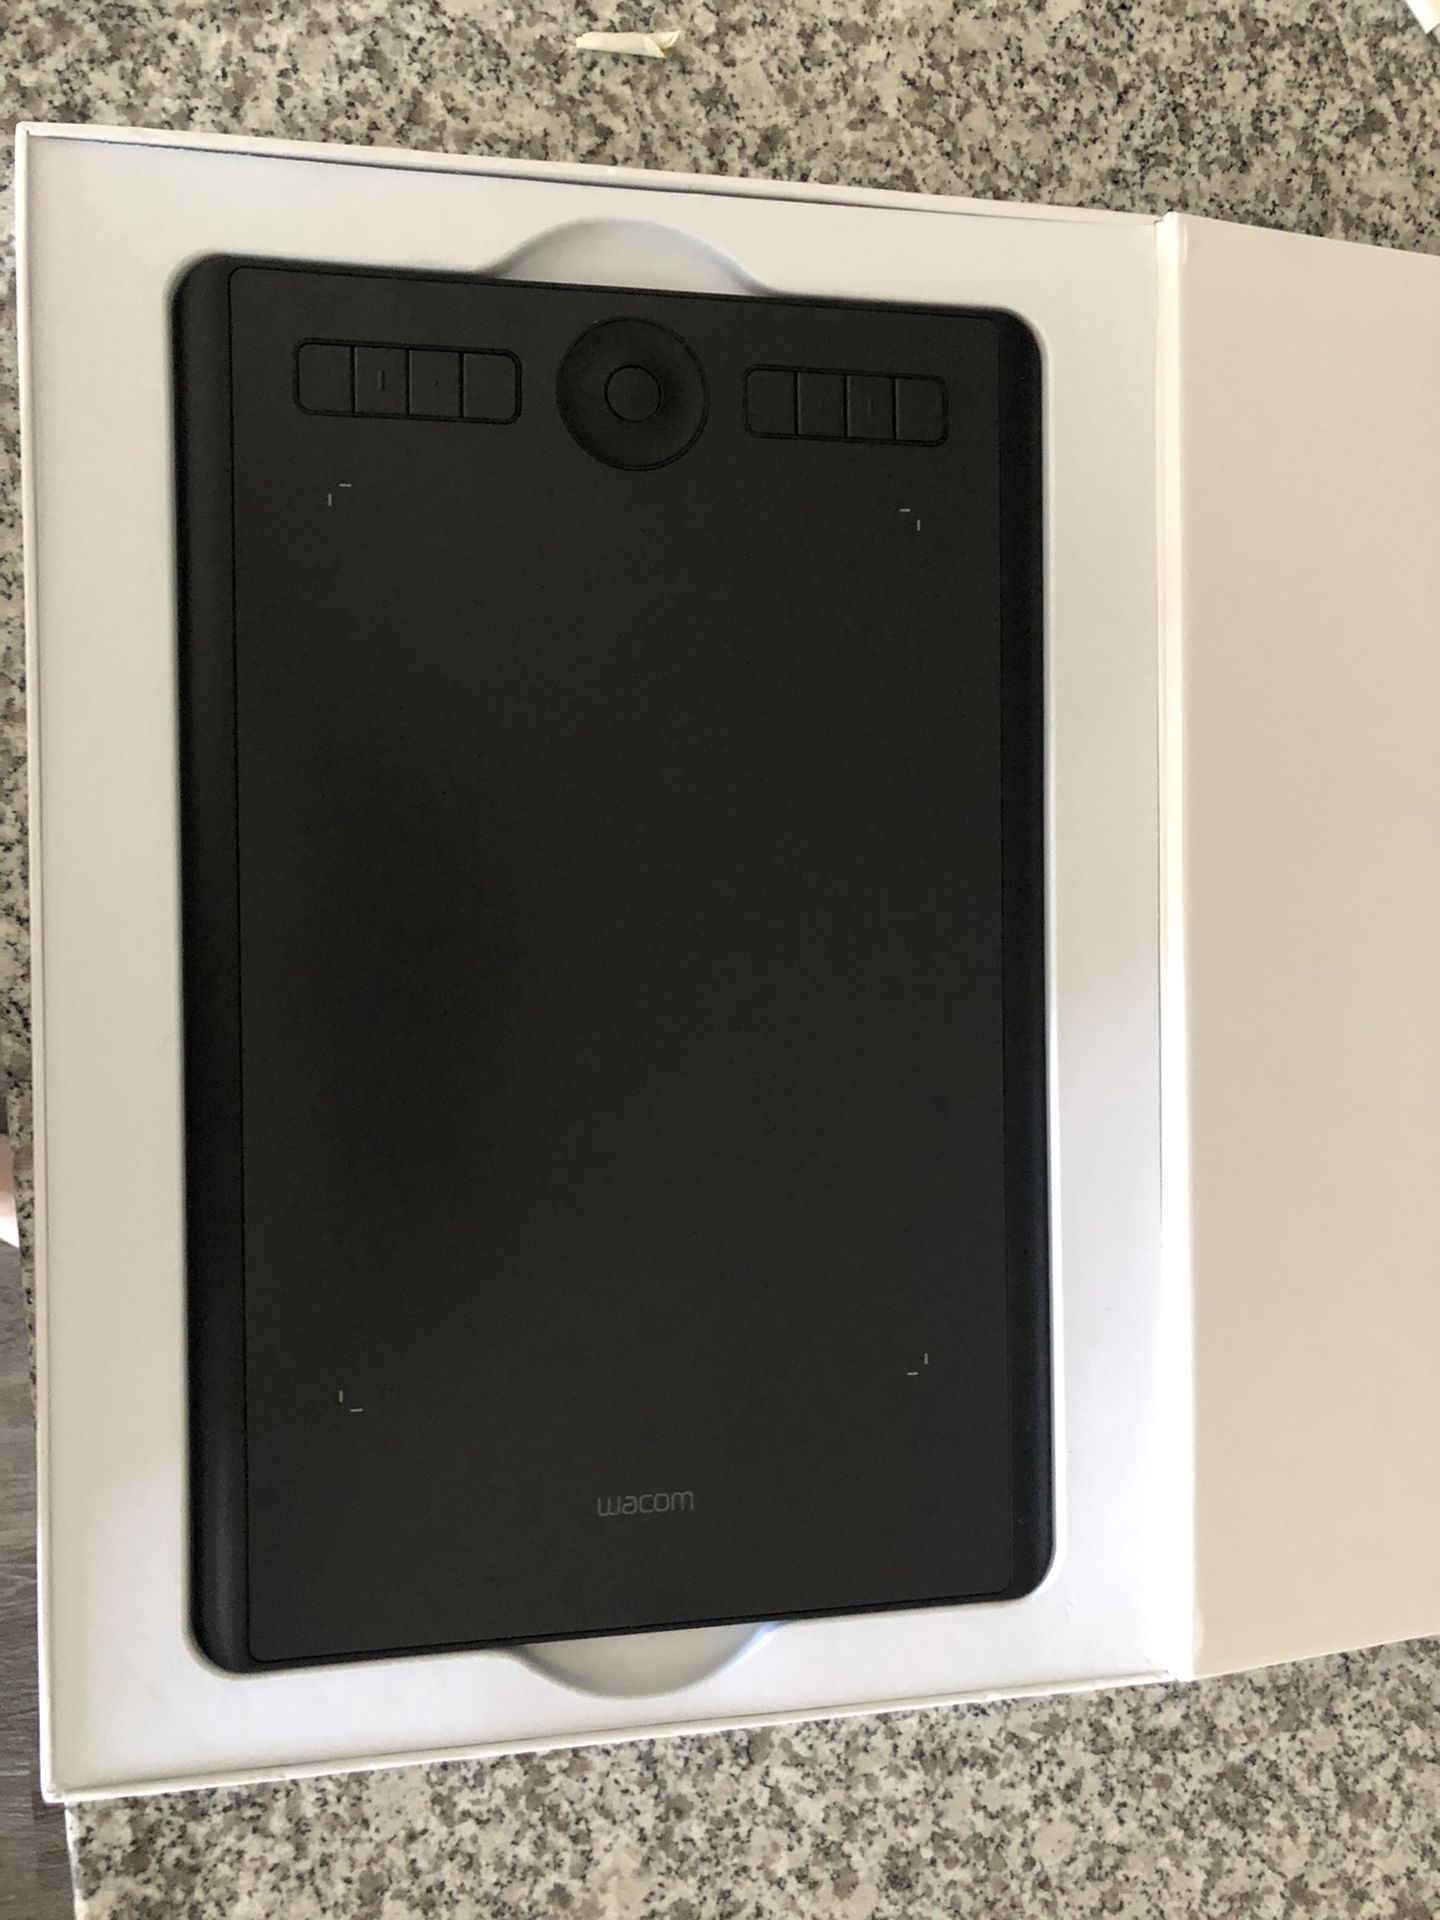 Wacom - Intuos Pro Pen Drawing Tablet (Medium) - Black